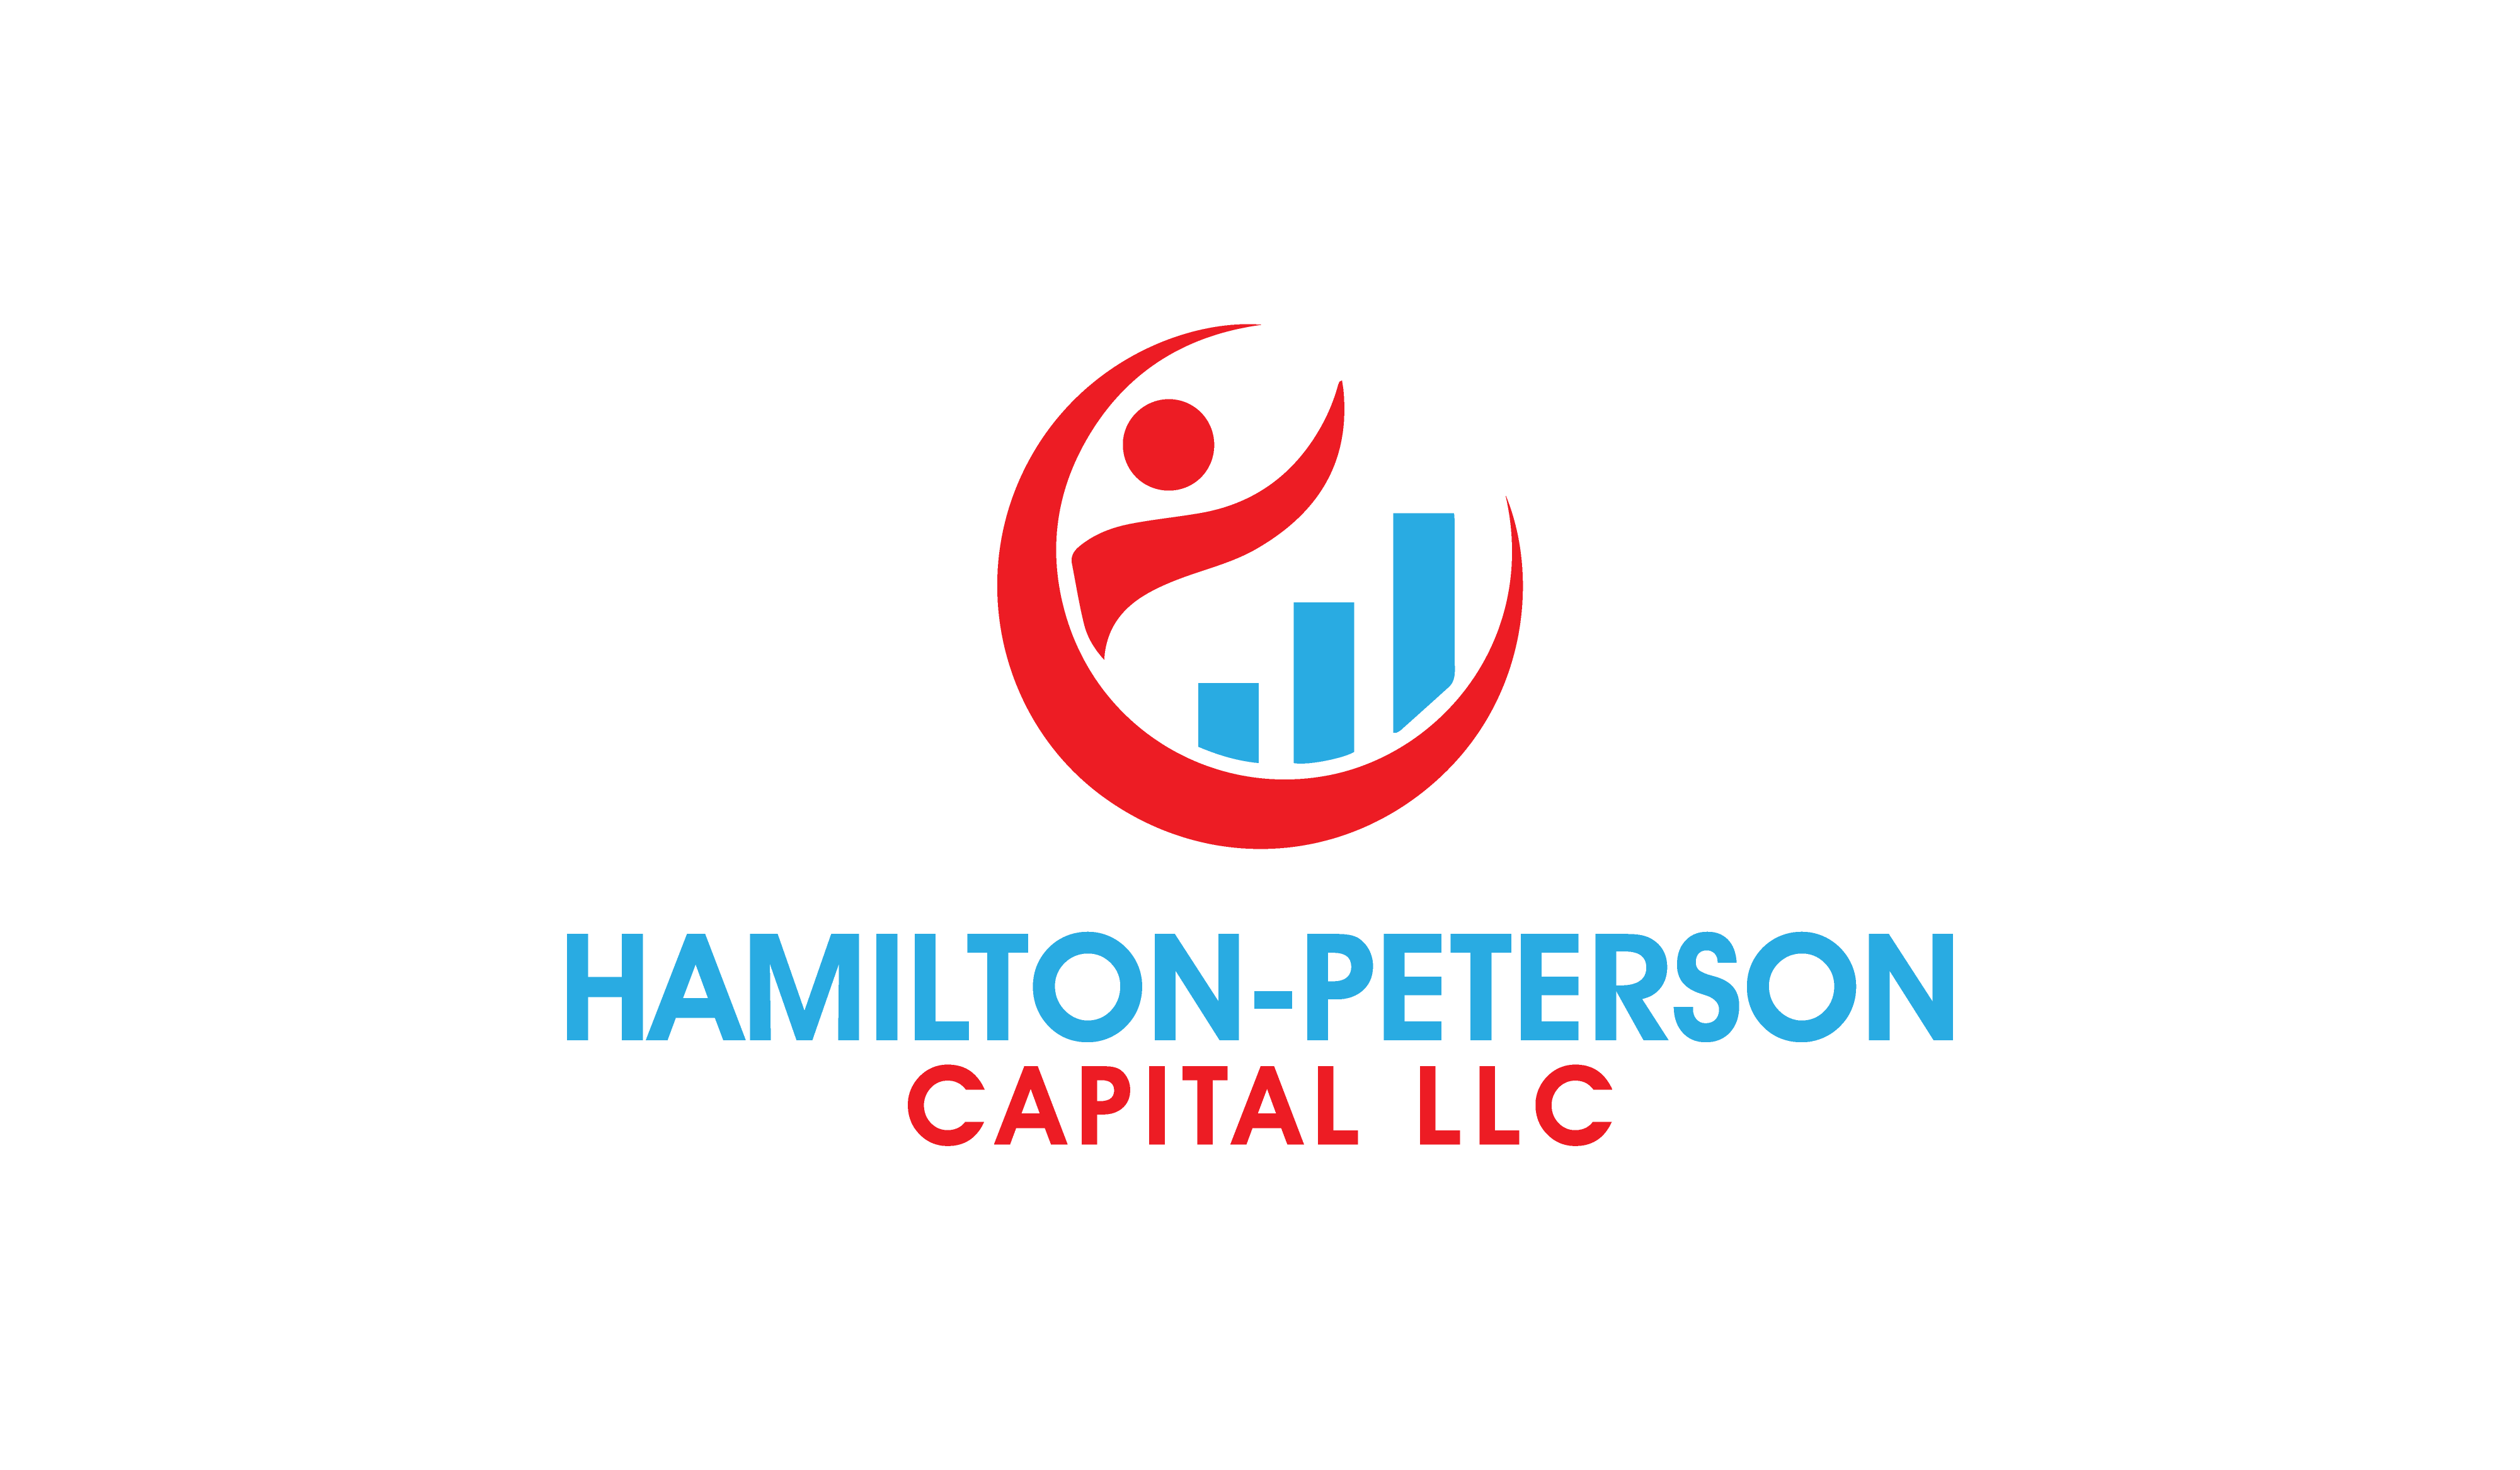 Hamilton-Peterson Capital LLC